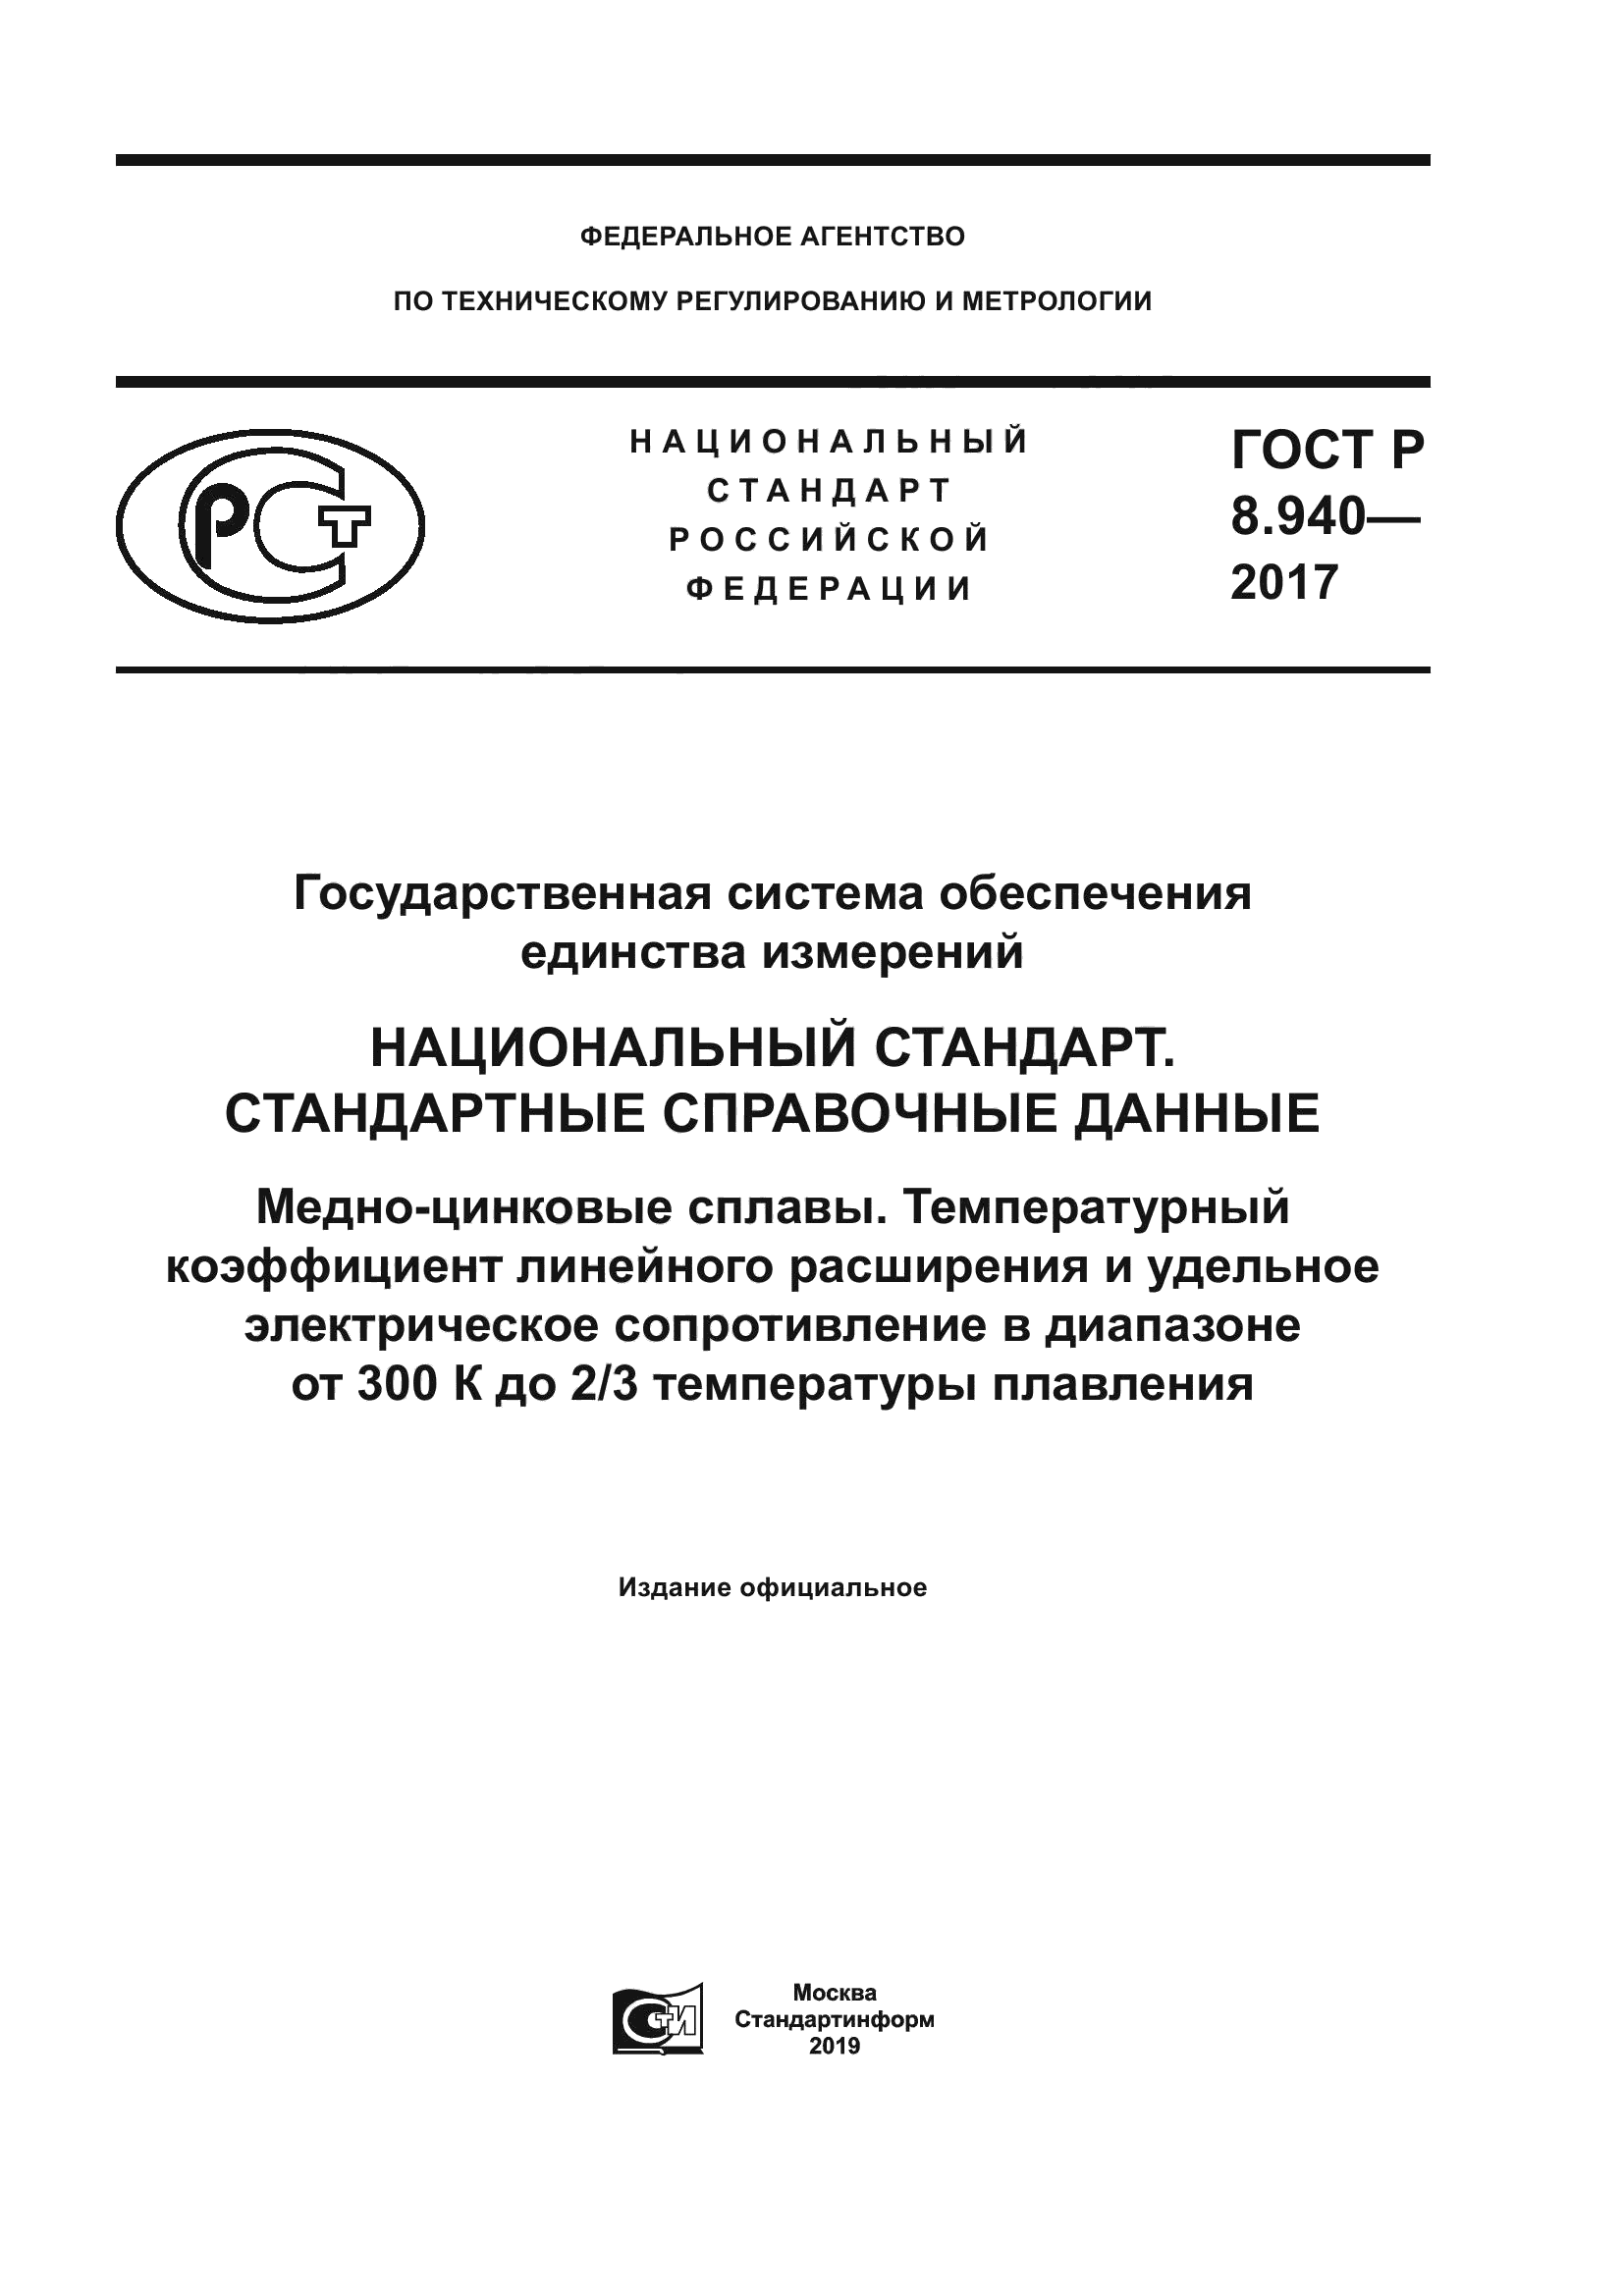 ГОСТ Р 8.940-2017